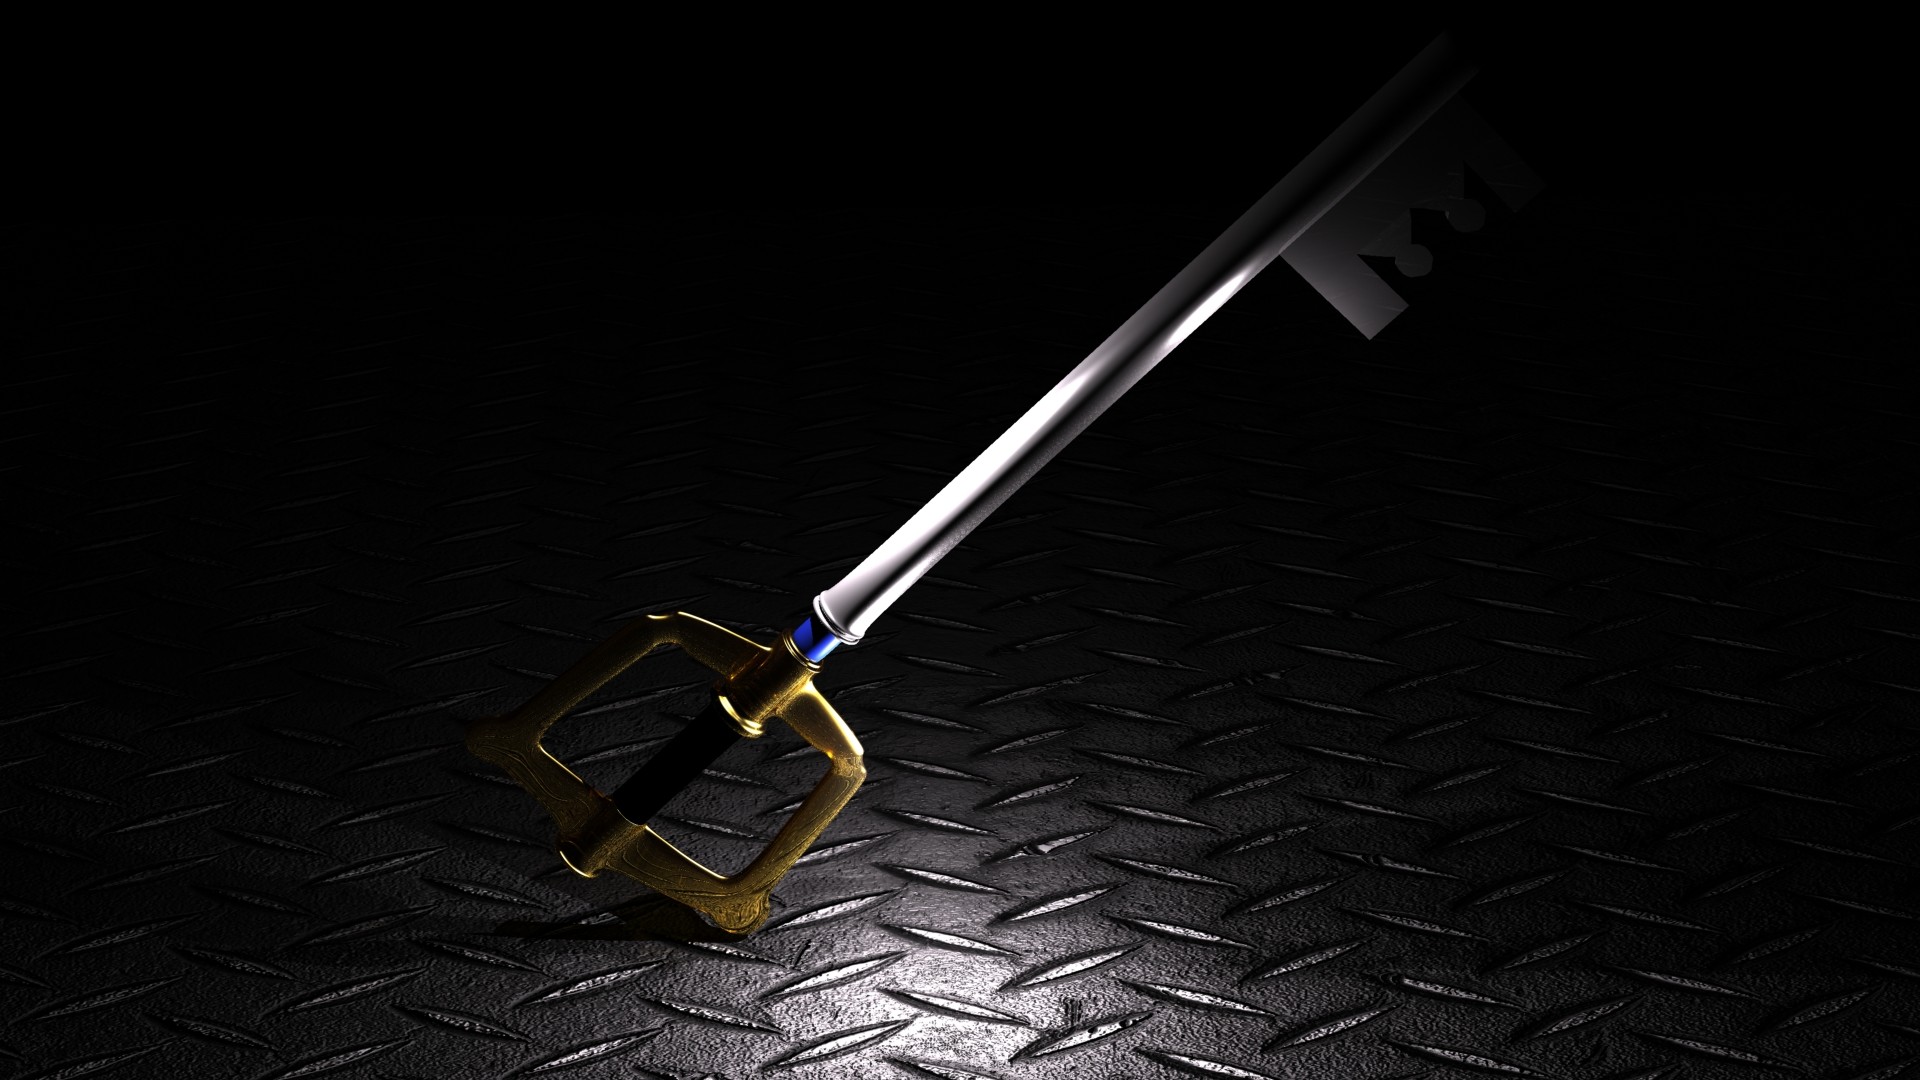 Keyblade – Kingdom Key by SoraKHbr Keyblade – Kingdom Key by SoraKHbr